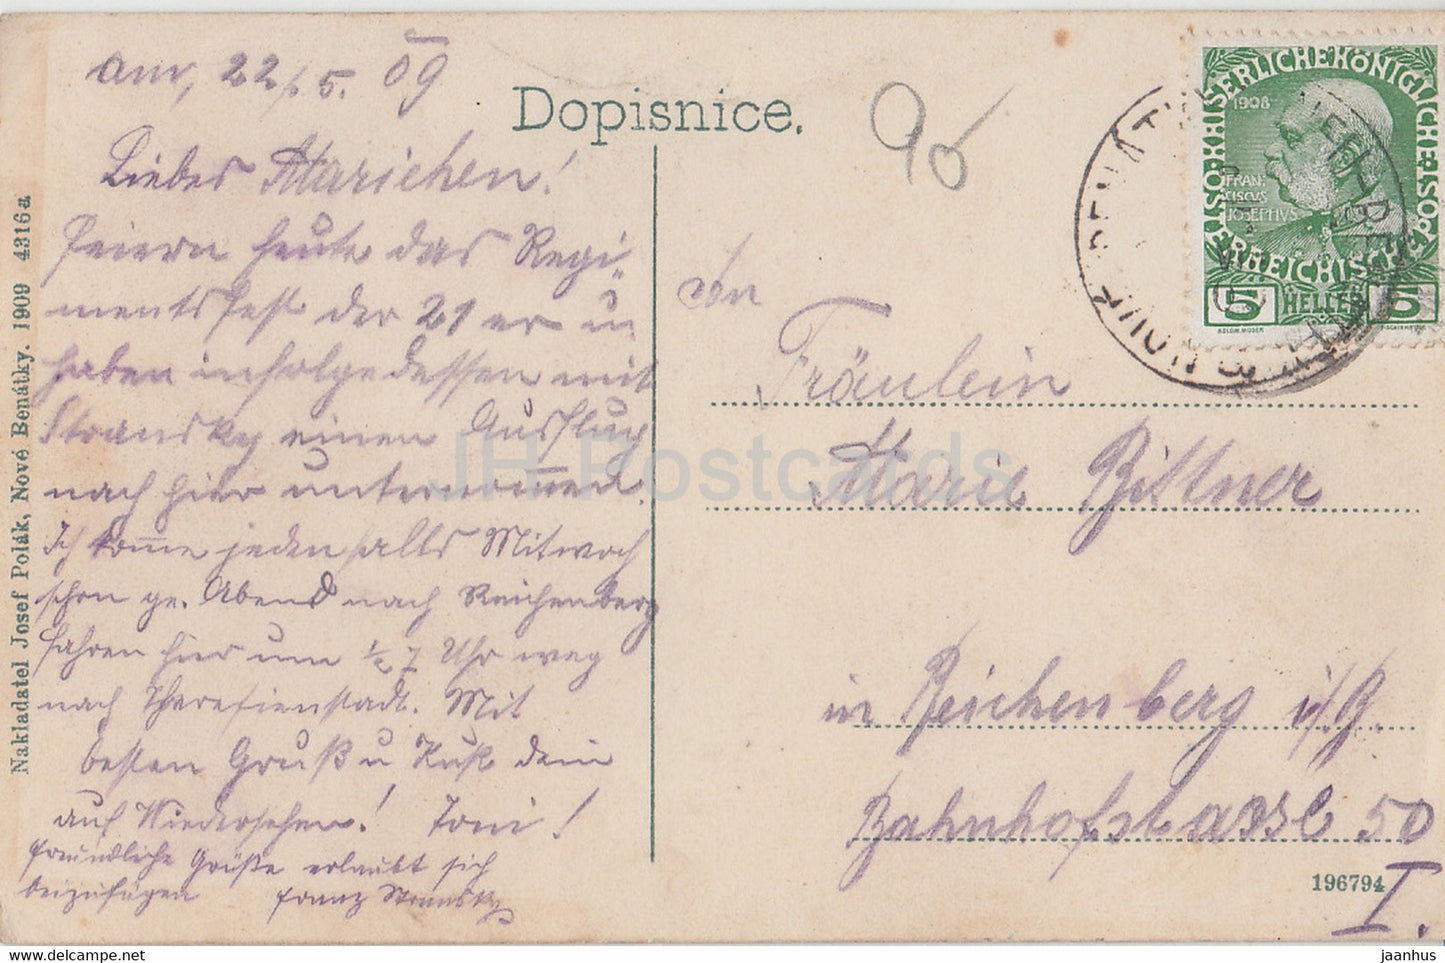 Stare Benatky - old postcard - 1909 - Czech Republic - used